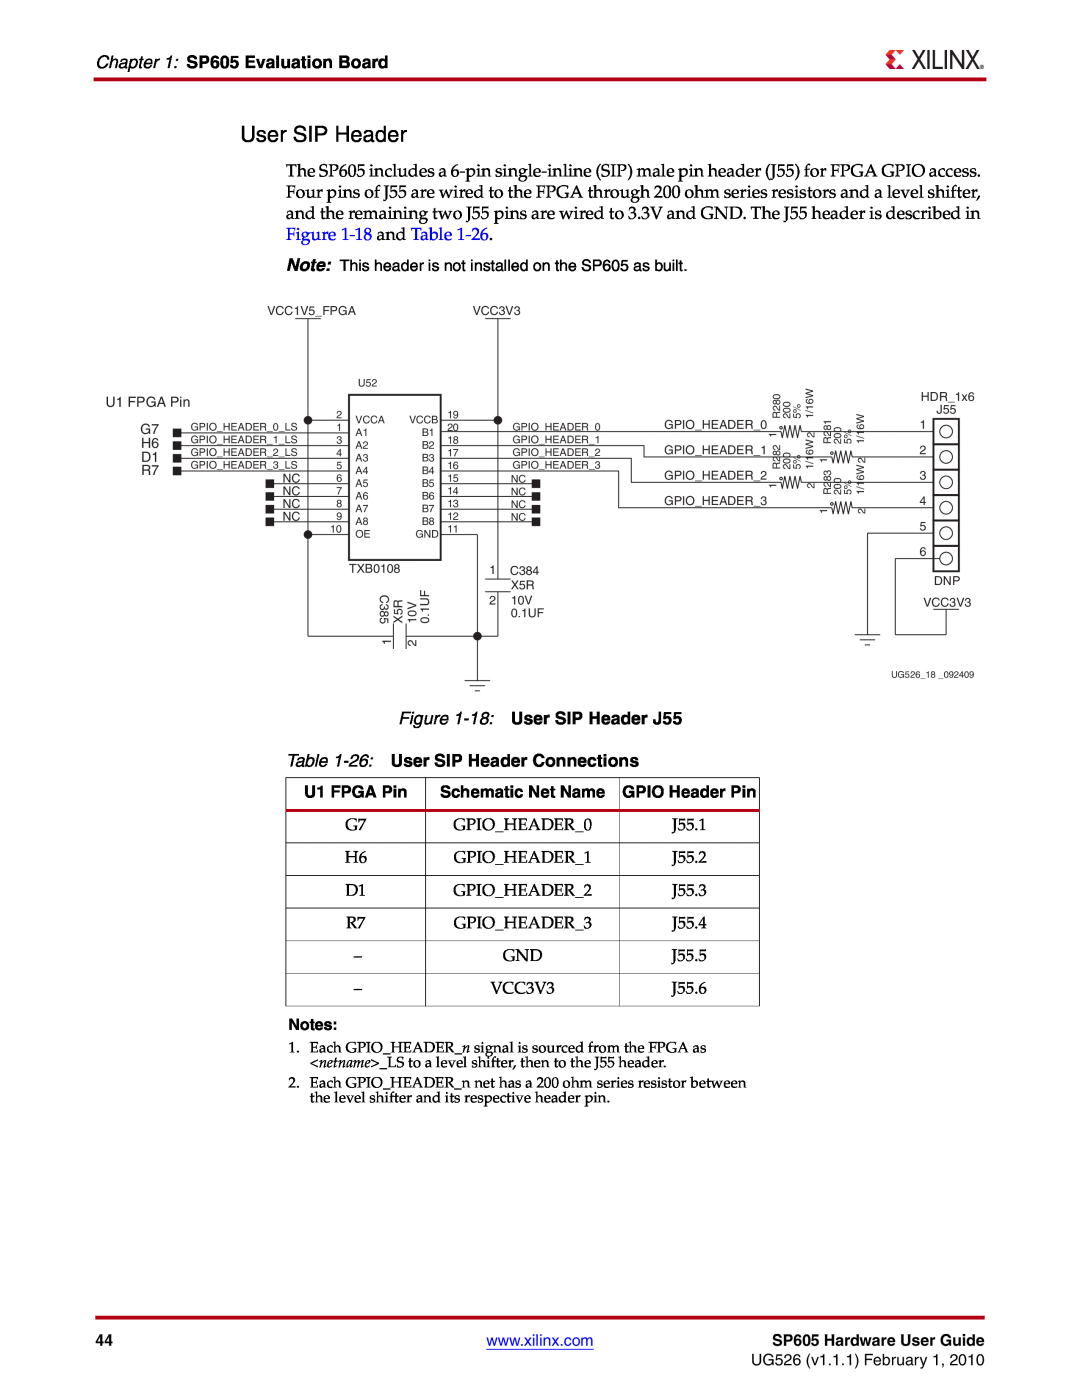 Xilinx manual 18 User SIP Header J55, 26 User SIP Header Connections, SP605 Evaluation Board, U1 FPGA Pin 